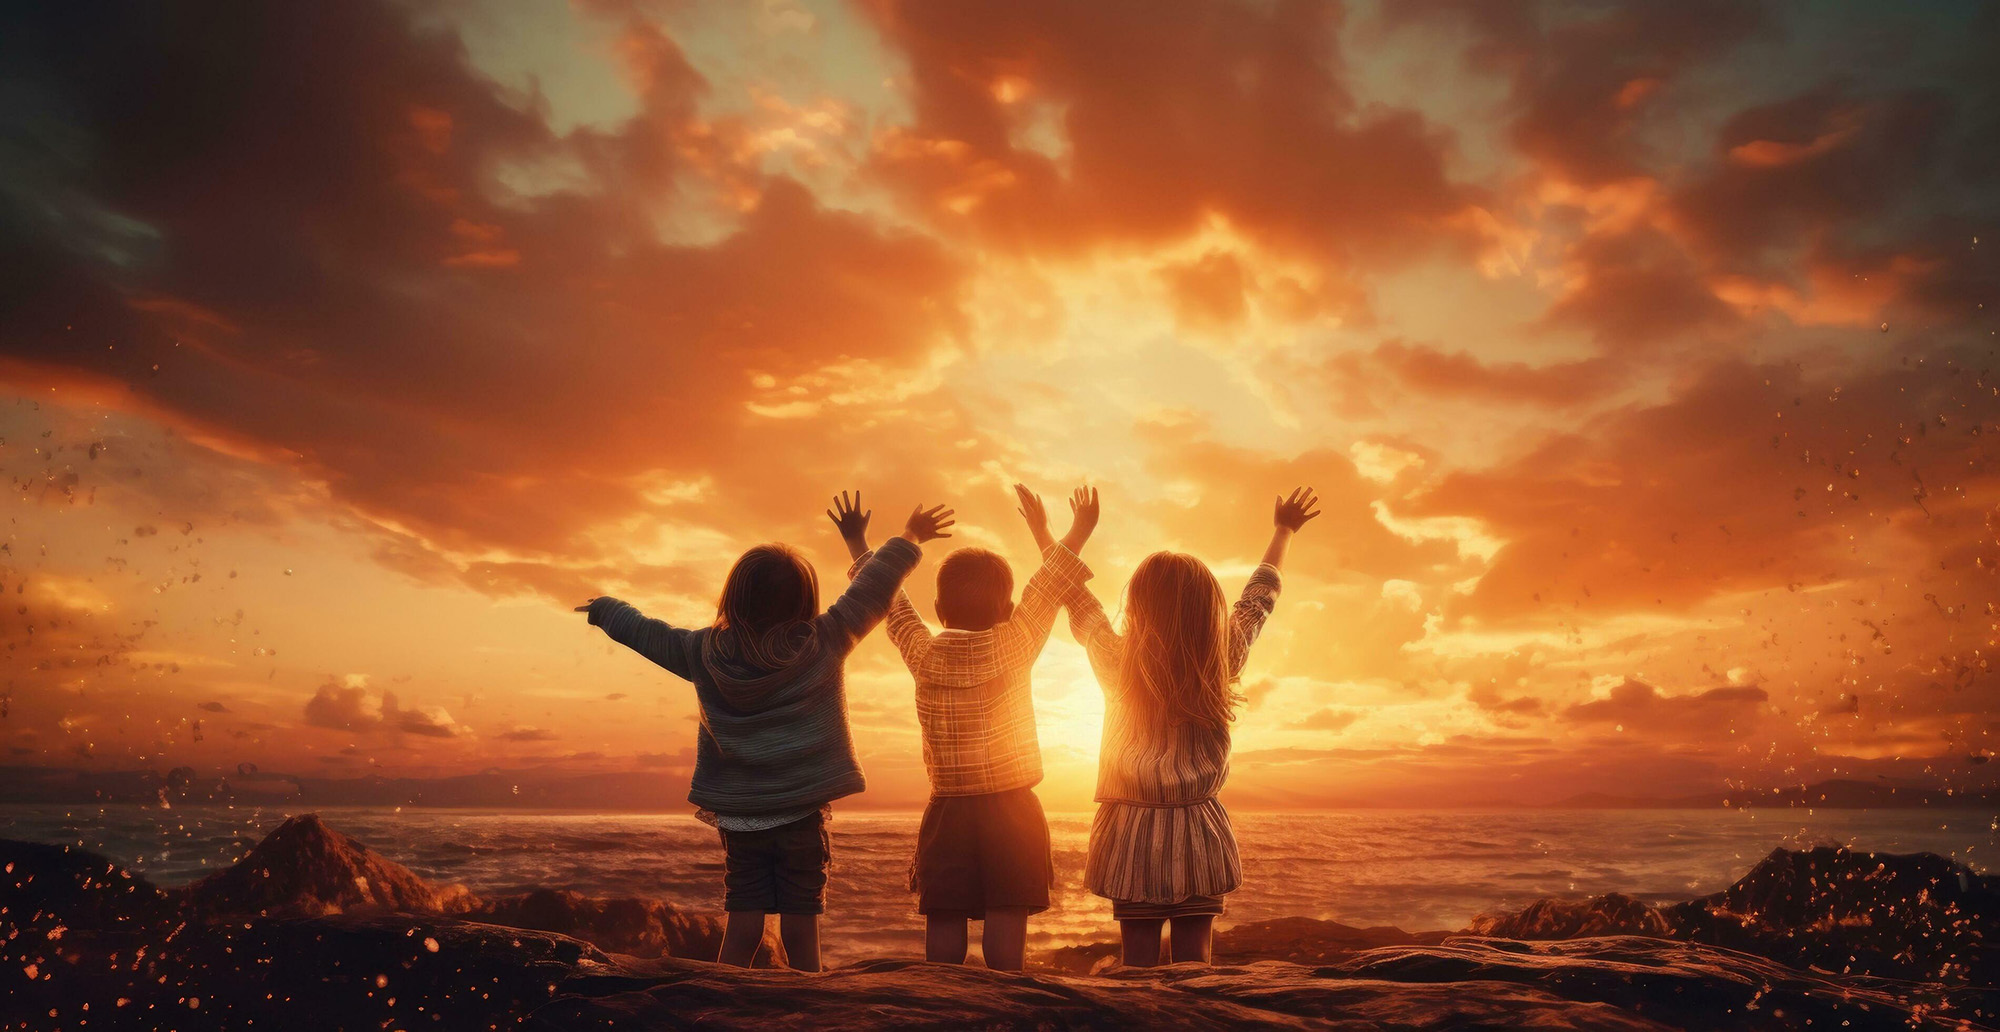 Kids raising their arms to the sky